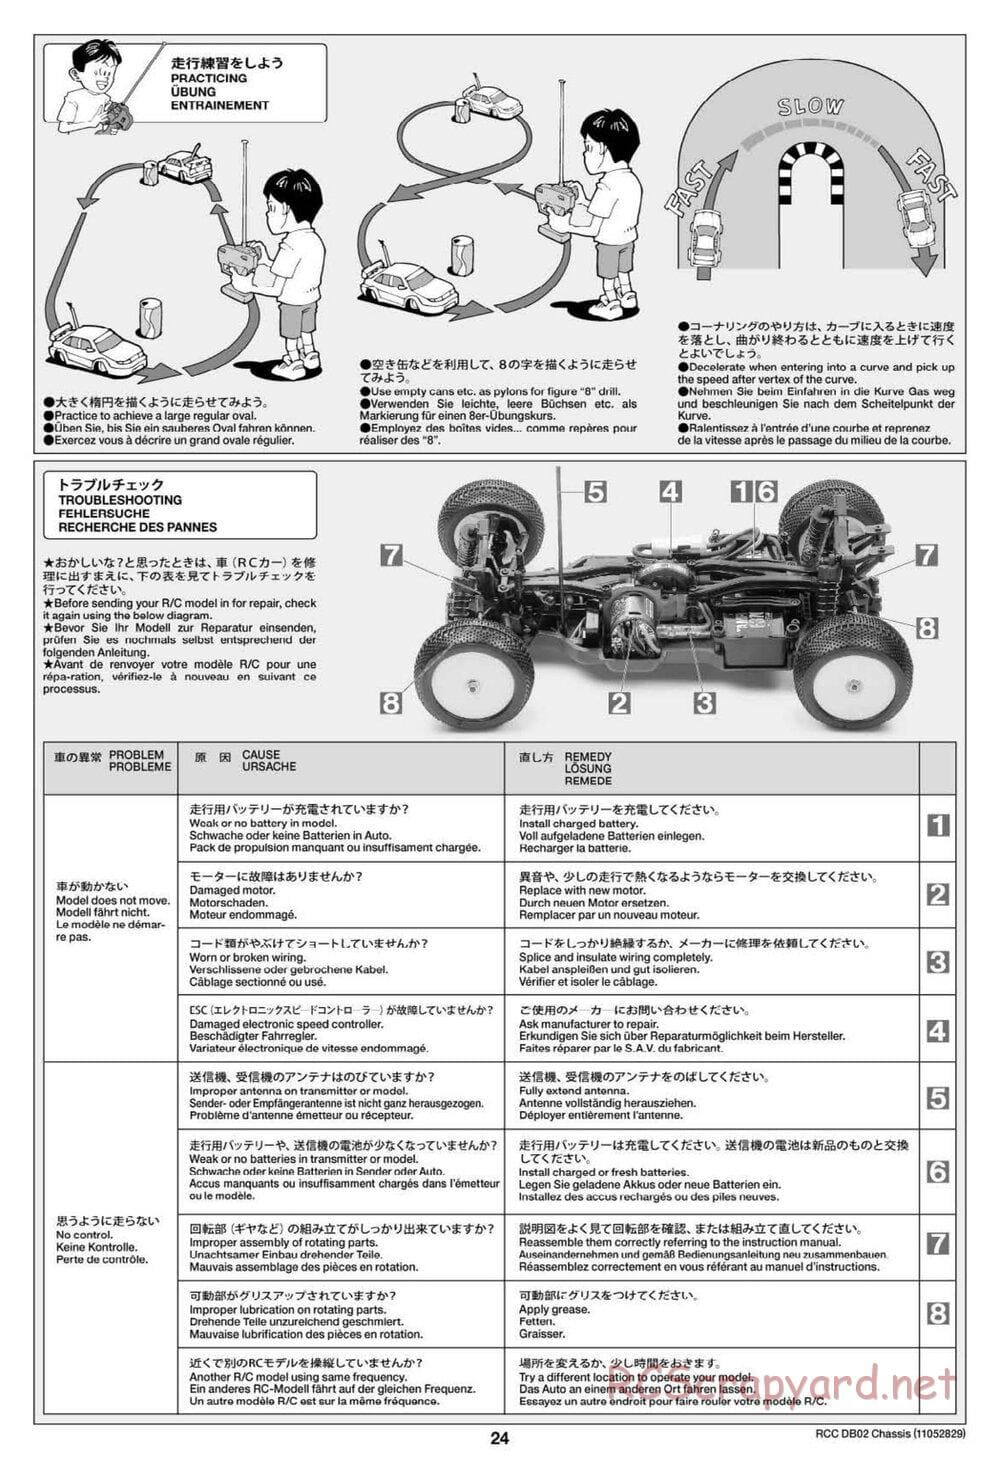 Tamiya - Leonis - DB-02 Chassis - Manual - Page 24